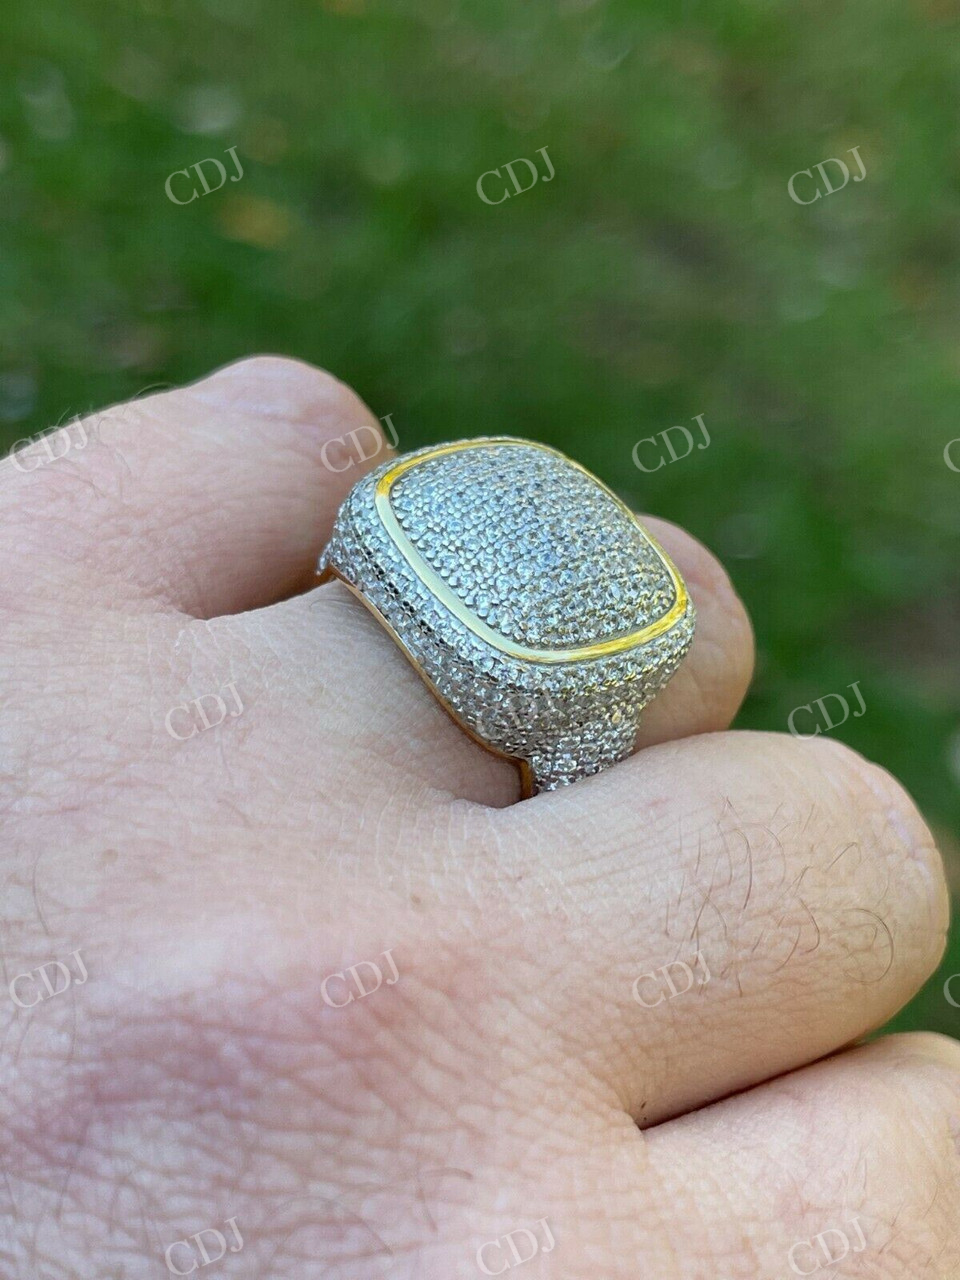 Fully Iced Out Diamond Hip Hop Ring For Men's  customdiamjewel   